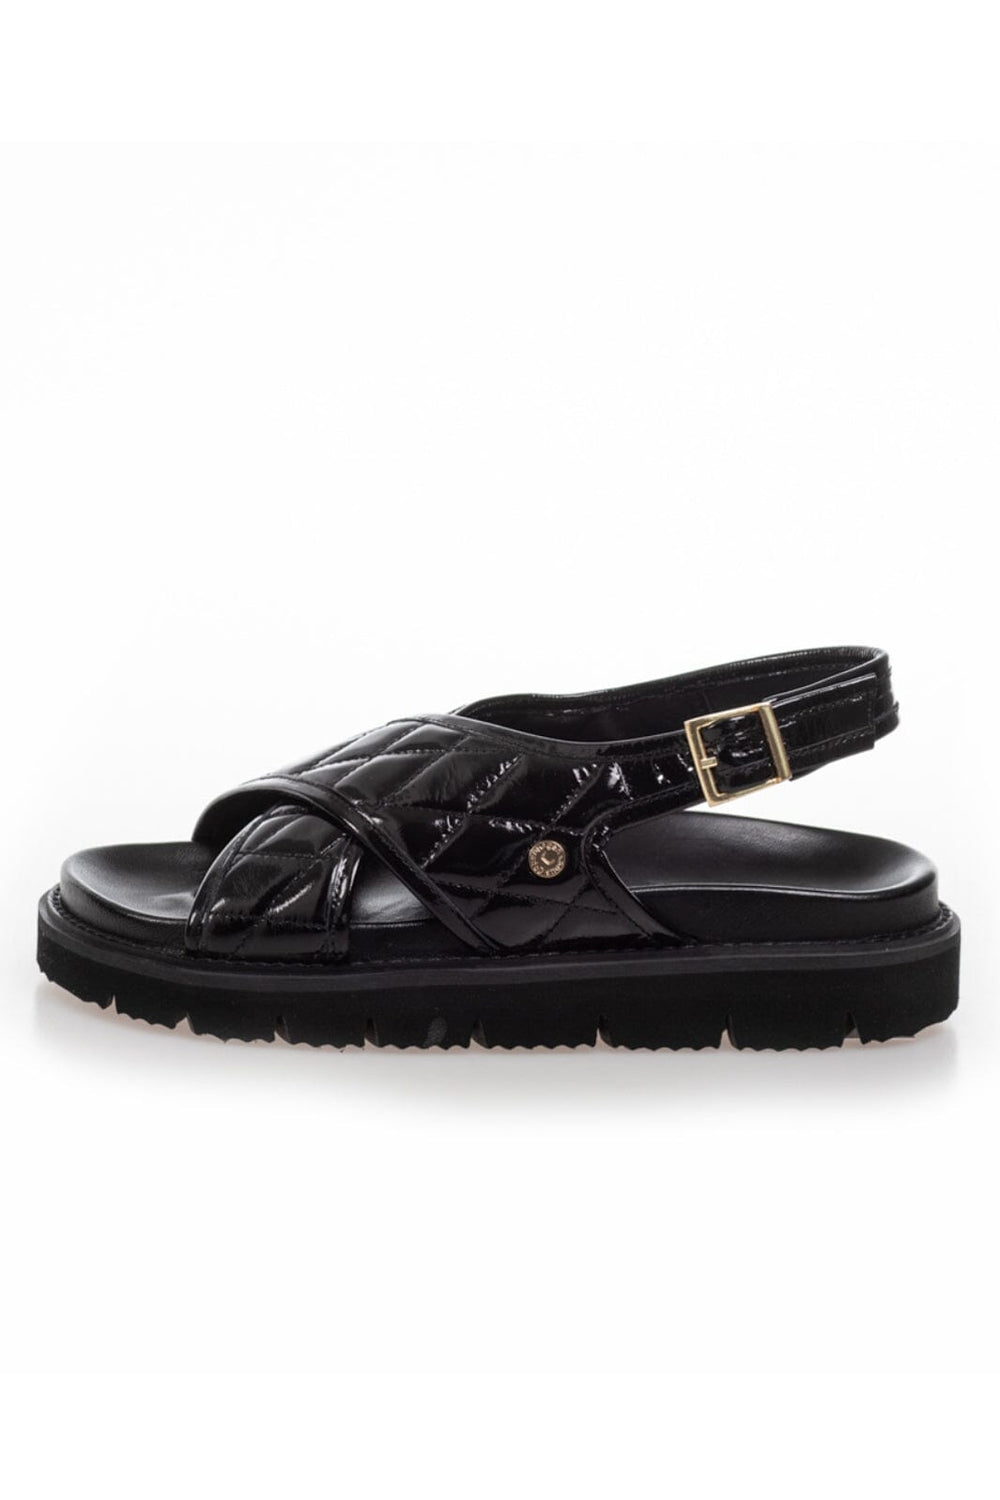 Forudbestilling - Copenhagen Shoes - Going Wild - Patent - 0001 Black - (Marts/April) Sandaler 